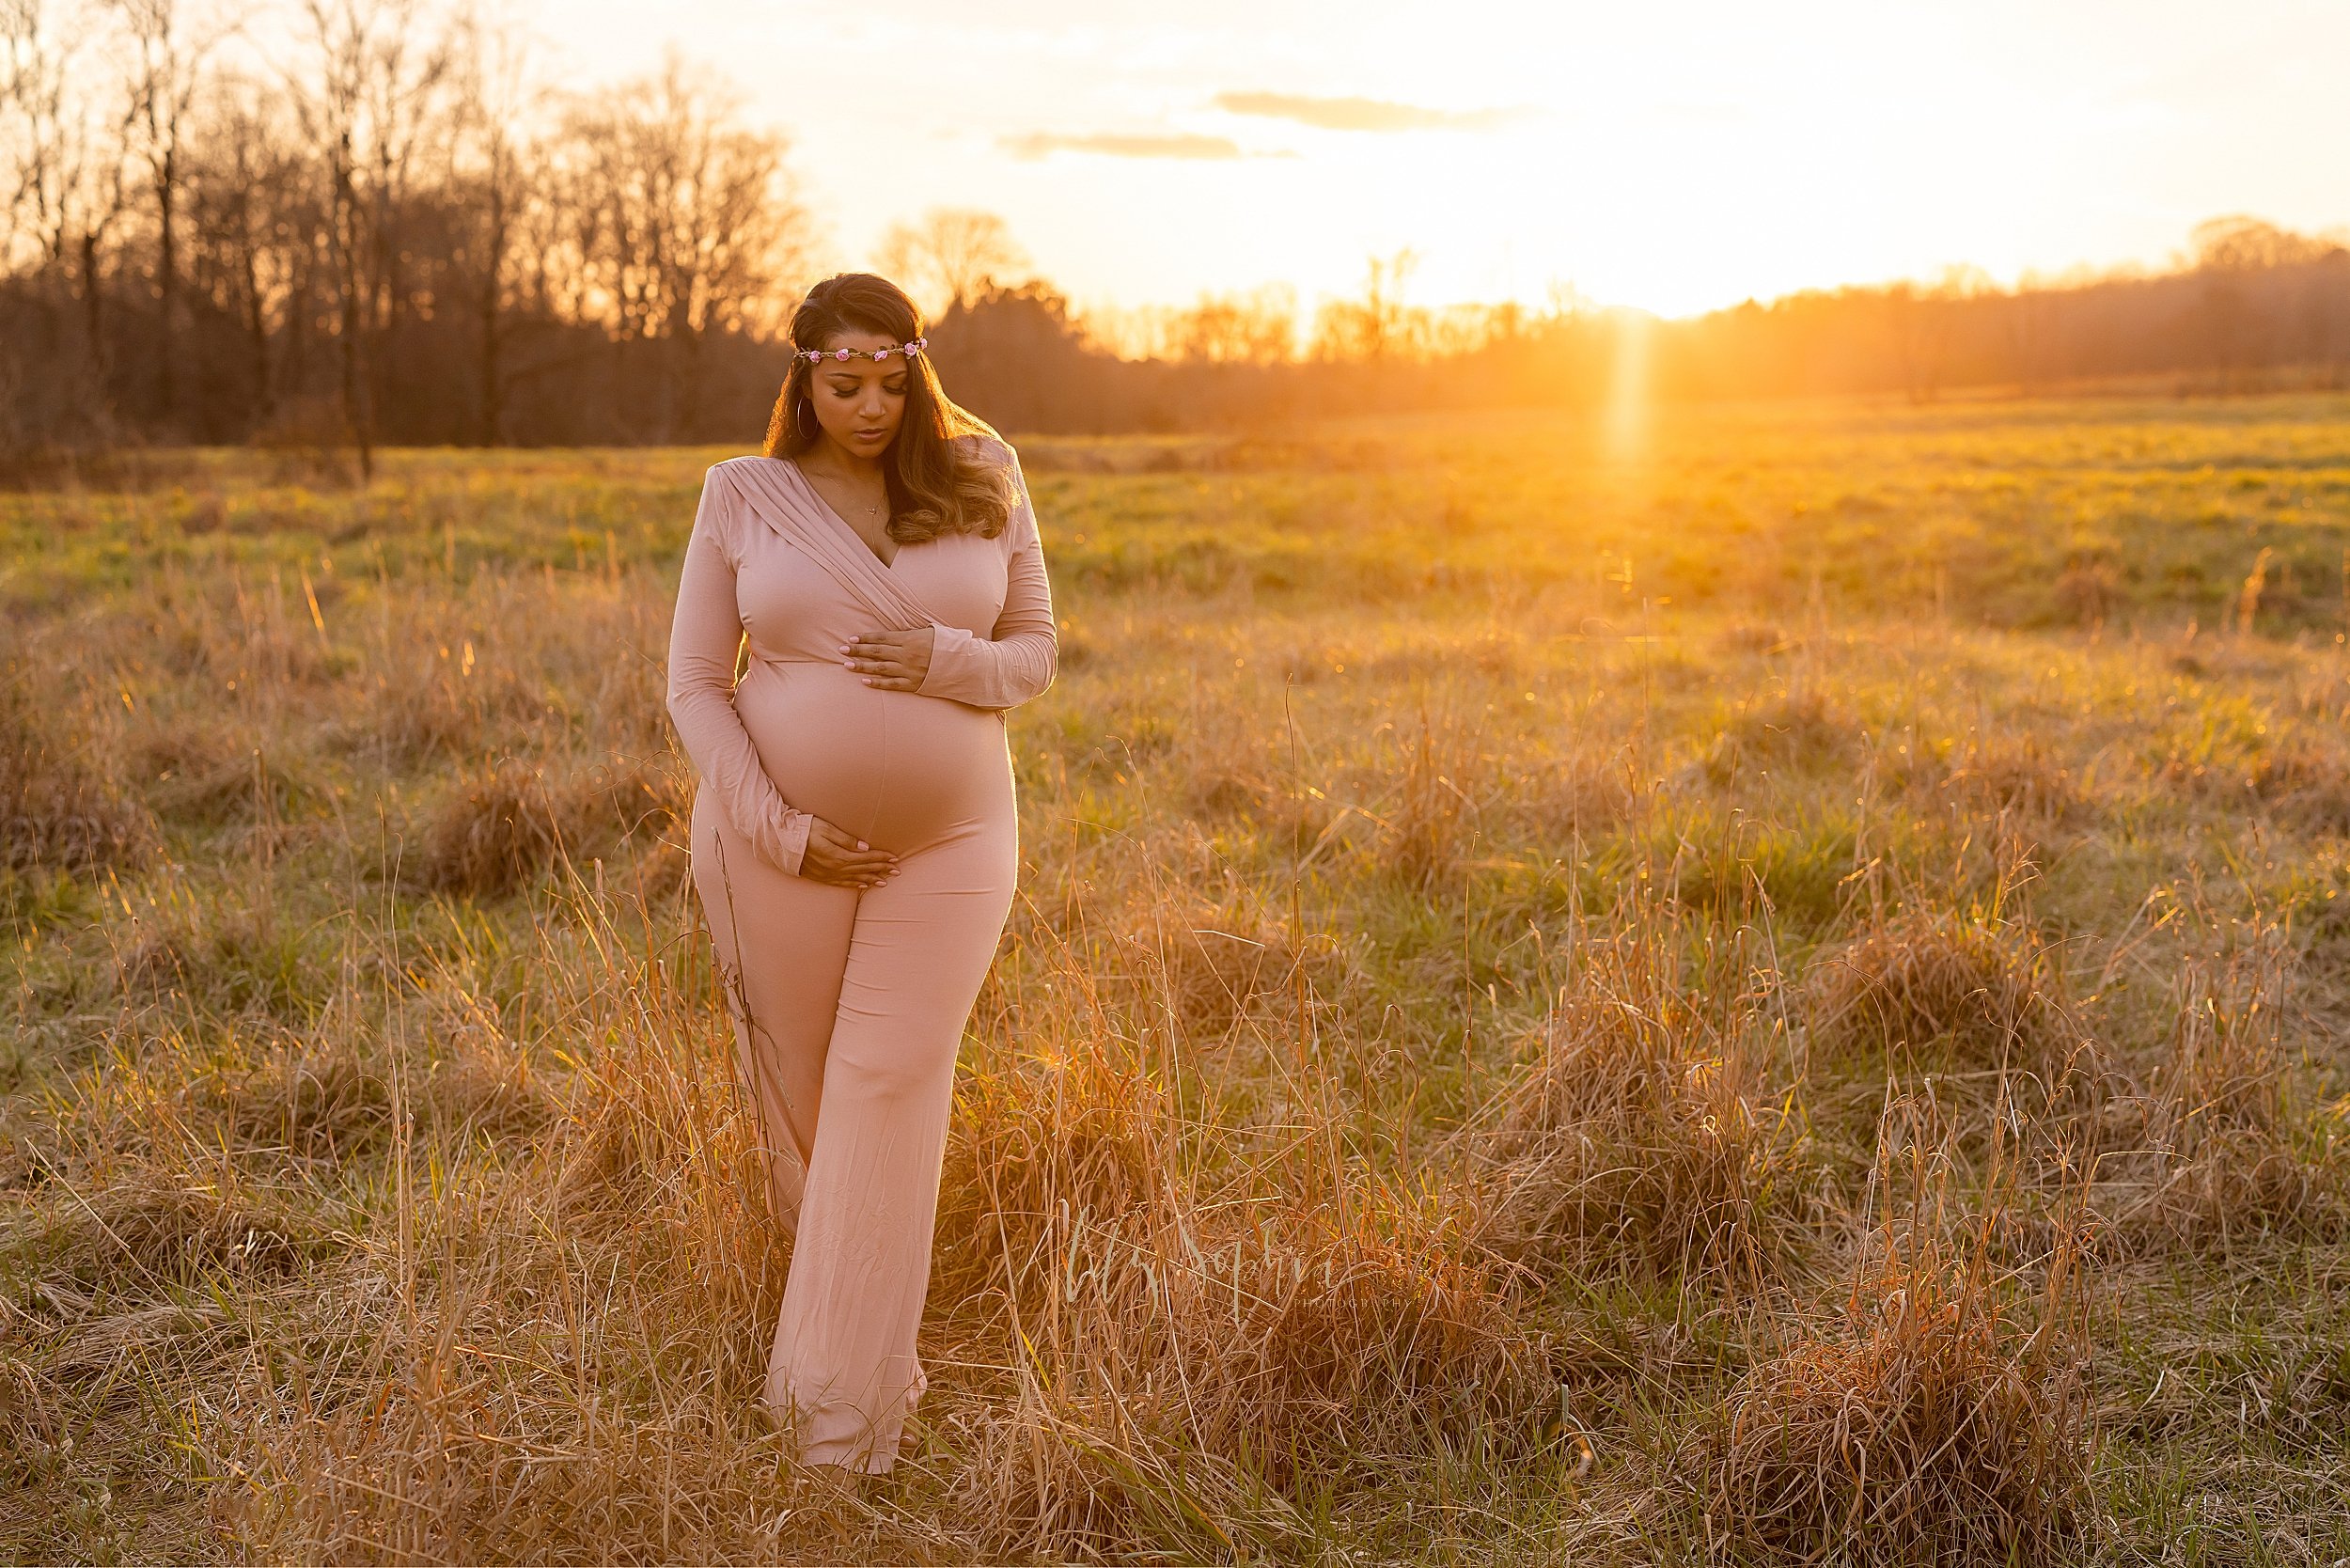 atlanta-pregnancy-photos-expecting-baby-girl-maternity-photoshoot-lawrenceville-oakhurst-decatur-kirkwood--brookhaven-buckhead-smyrna-mableton-midtown-virginia-highlands_8770.jpg